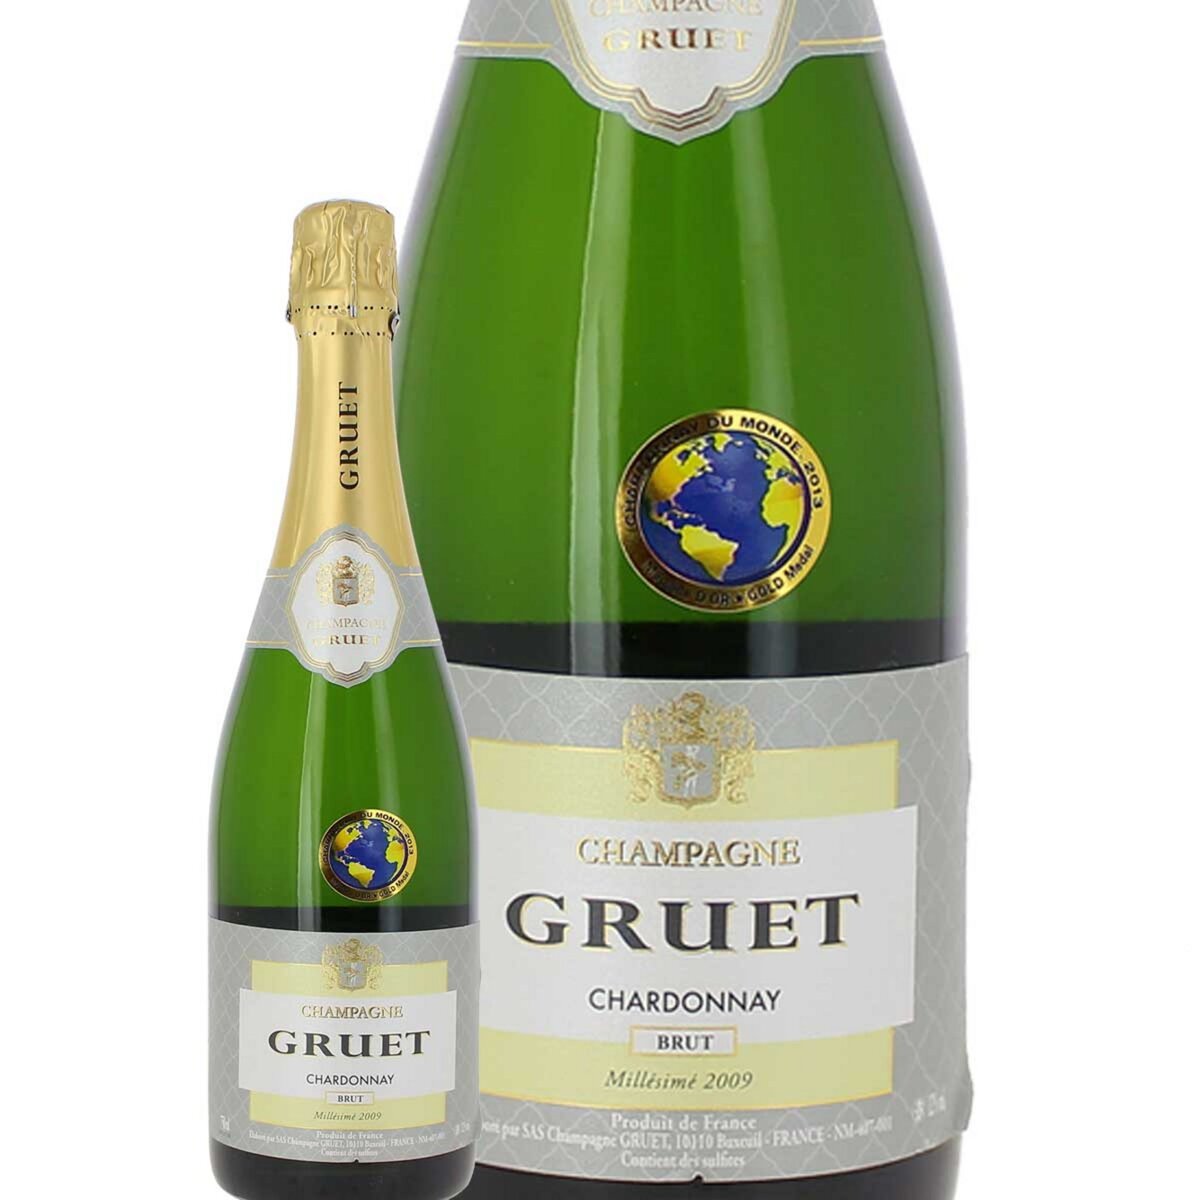 Gruet Champagne Gruet Brut 100 % Chardonnay 2009